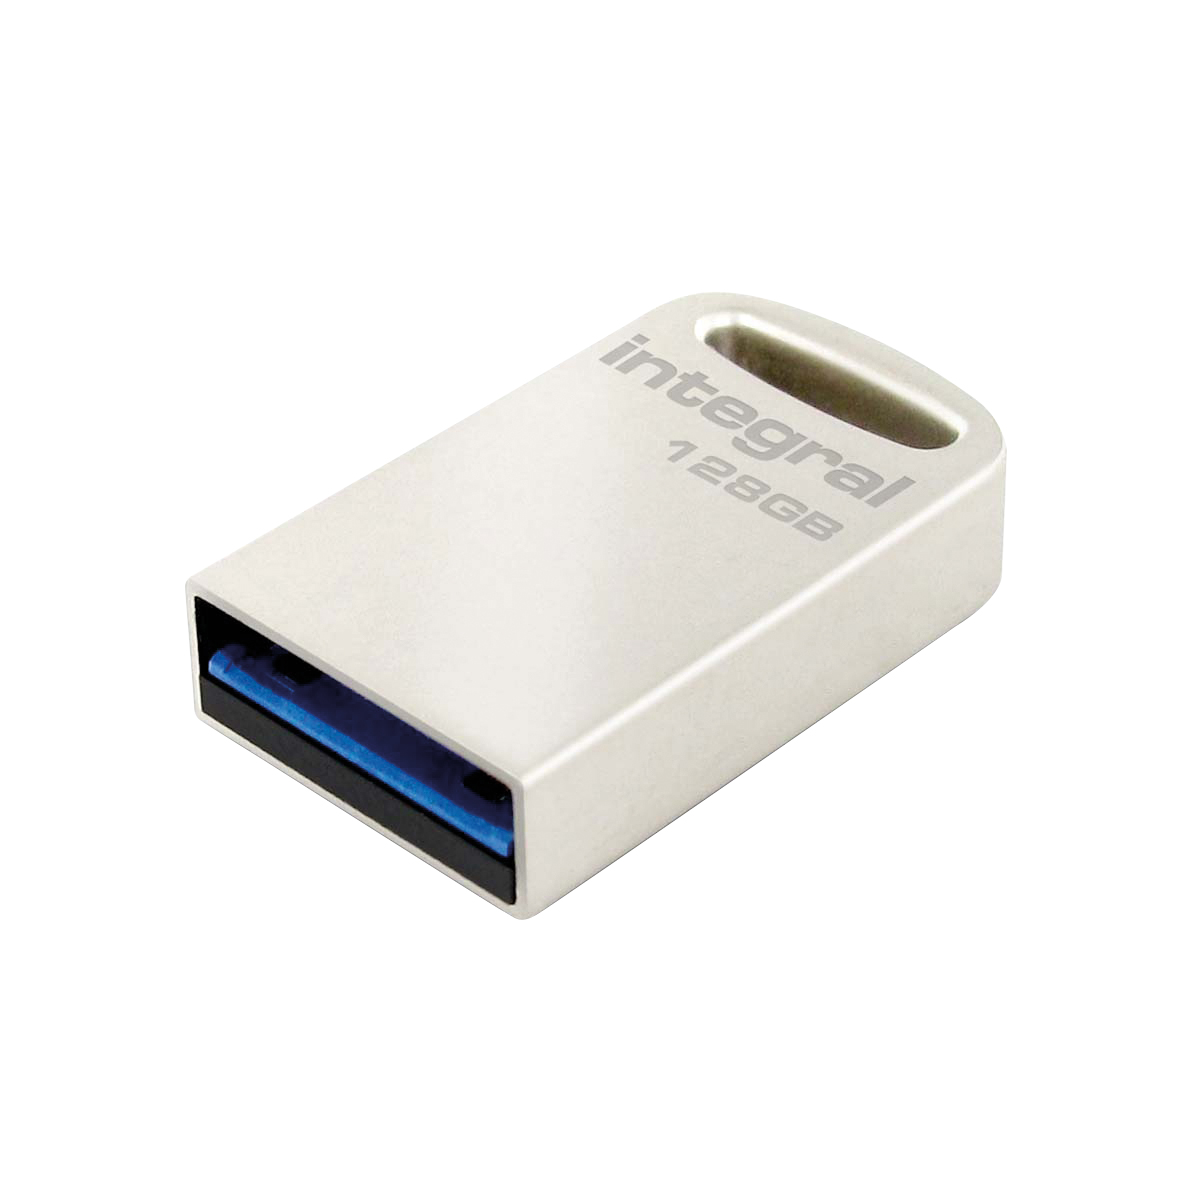 Integral Metal Fusion USB 3.0 Flash Drive - Silver - 128GB